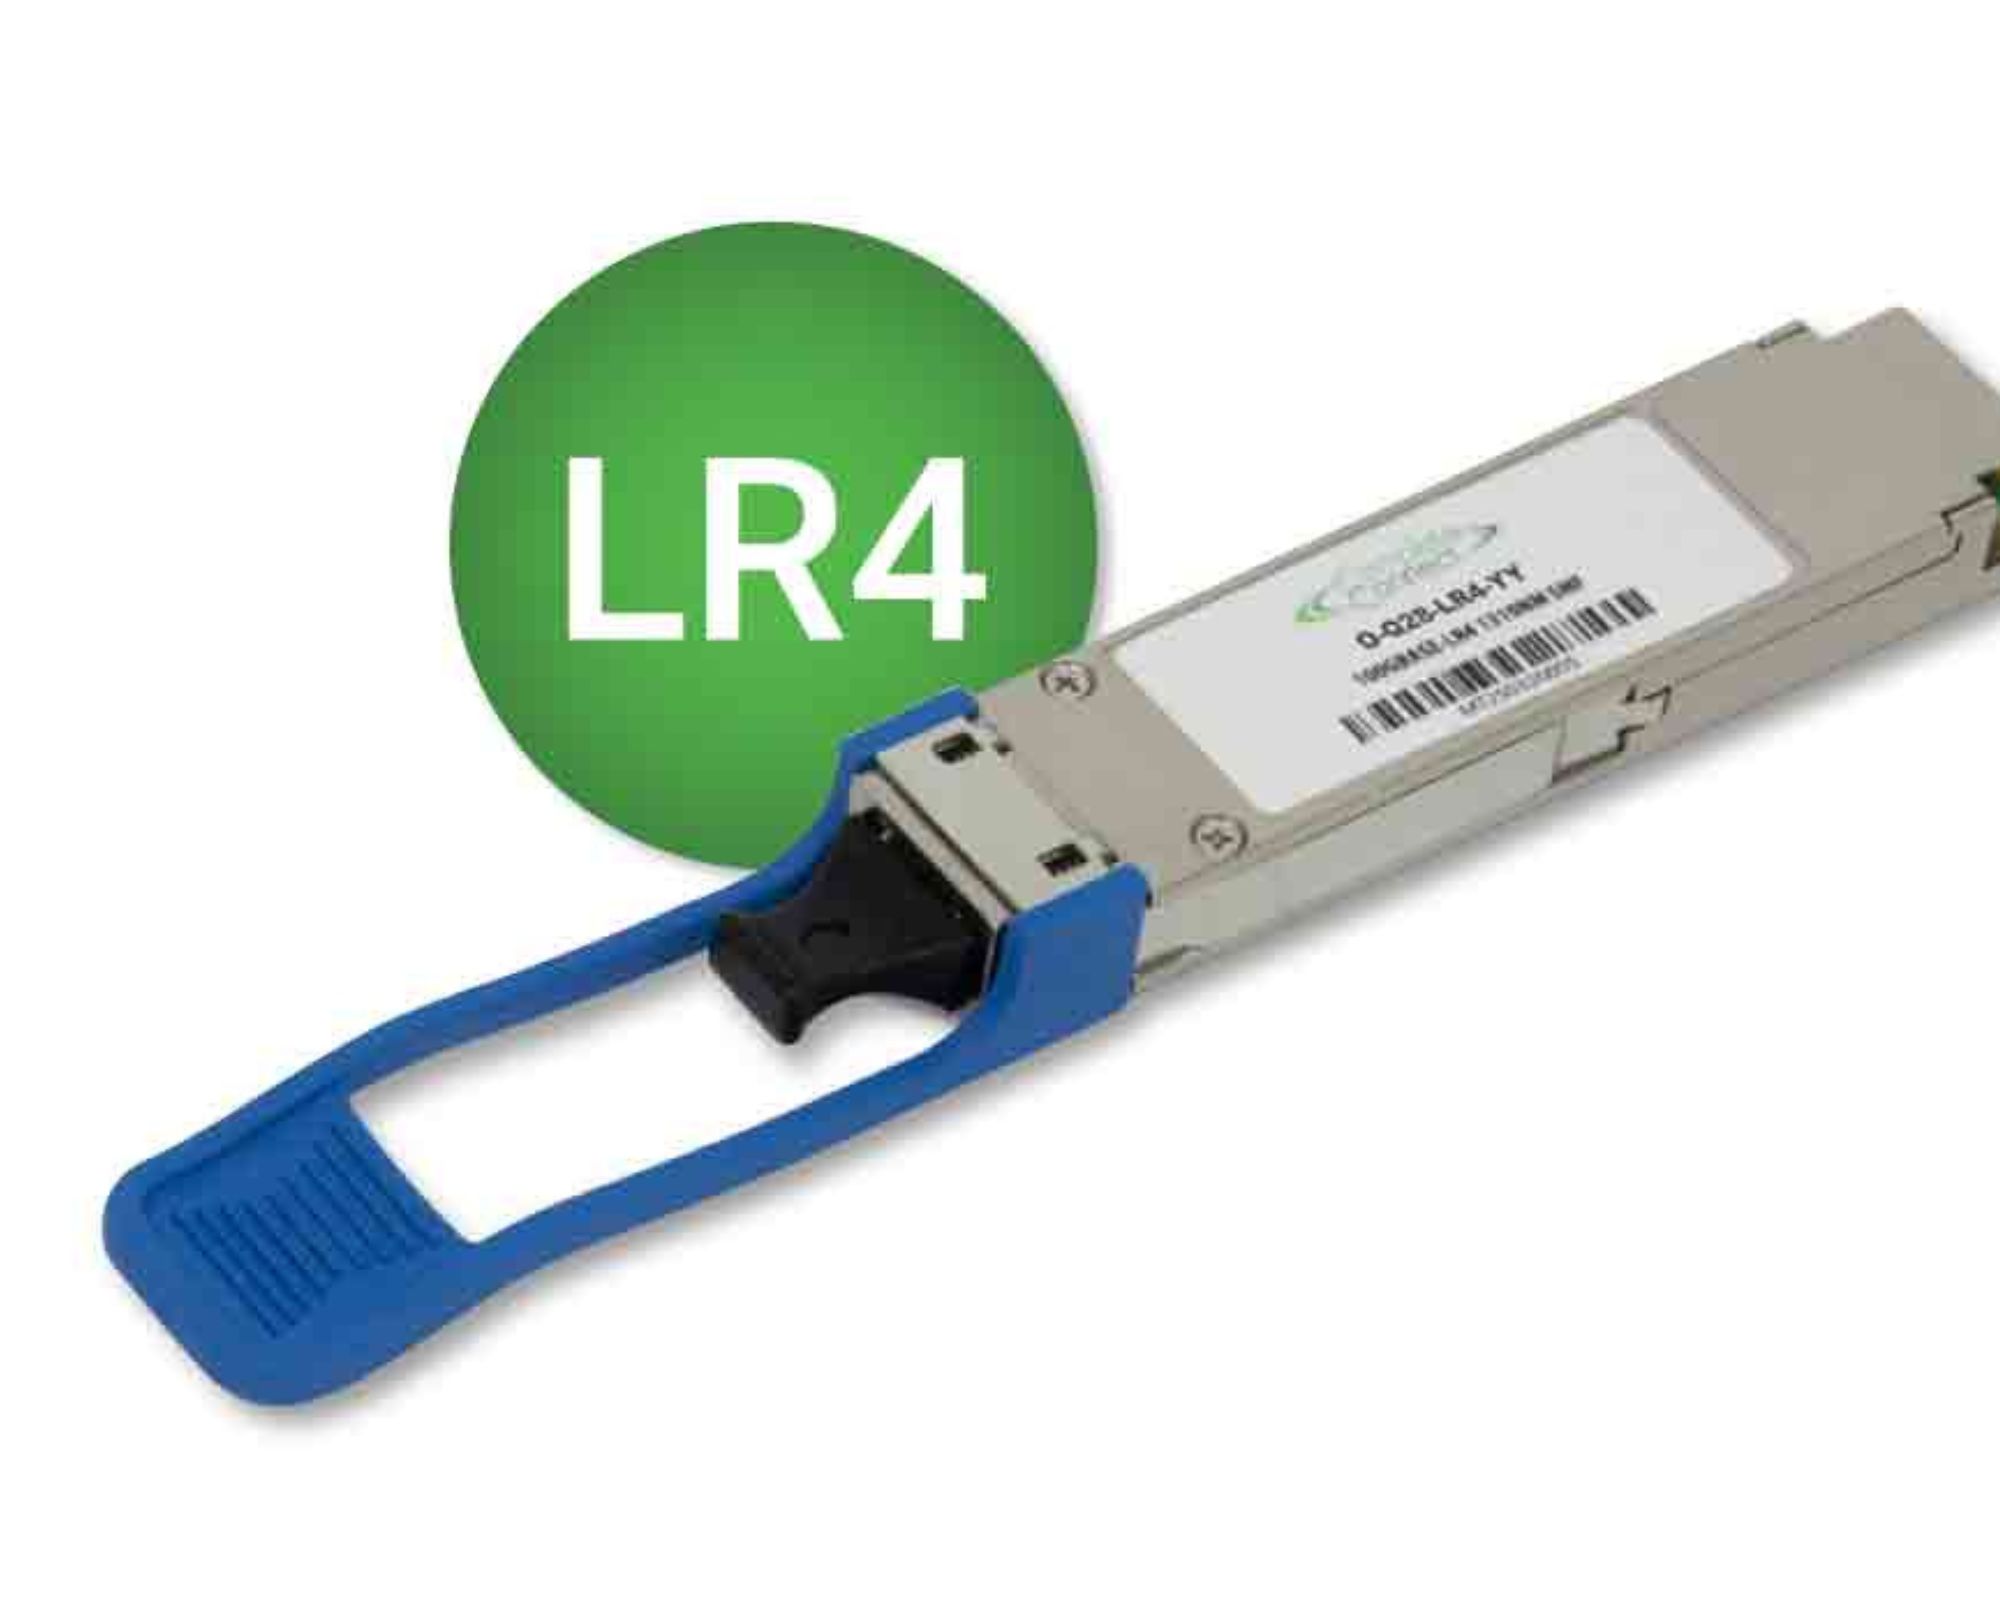 QSFP28 LR4 Optical Transceiver: Empowering High-Speed Data Transmission